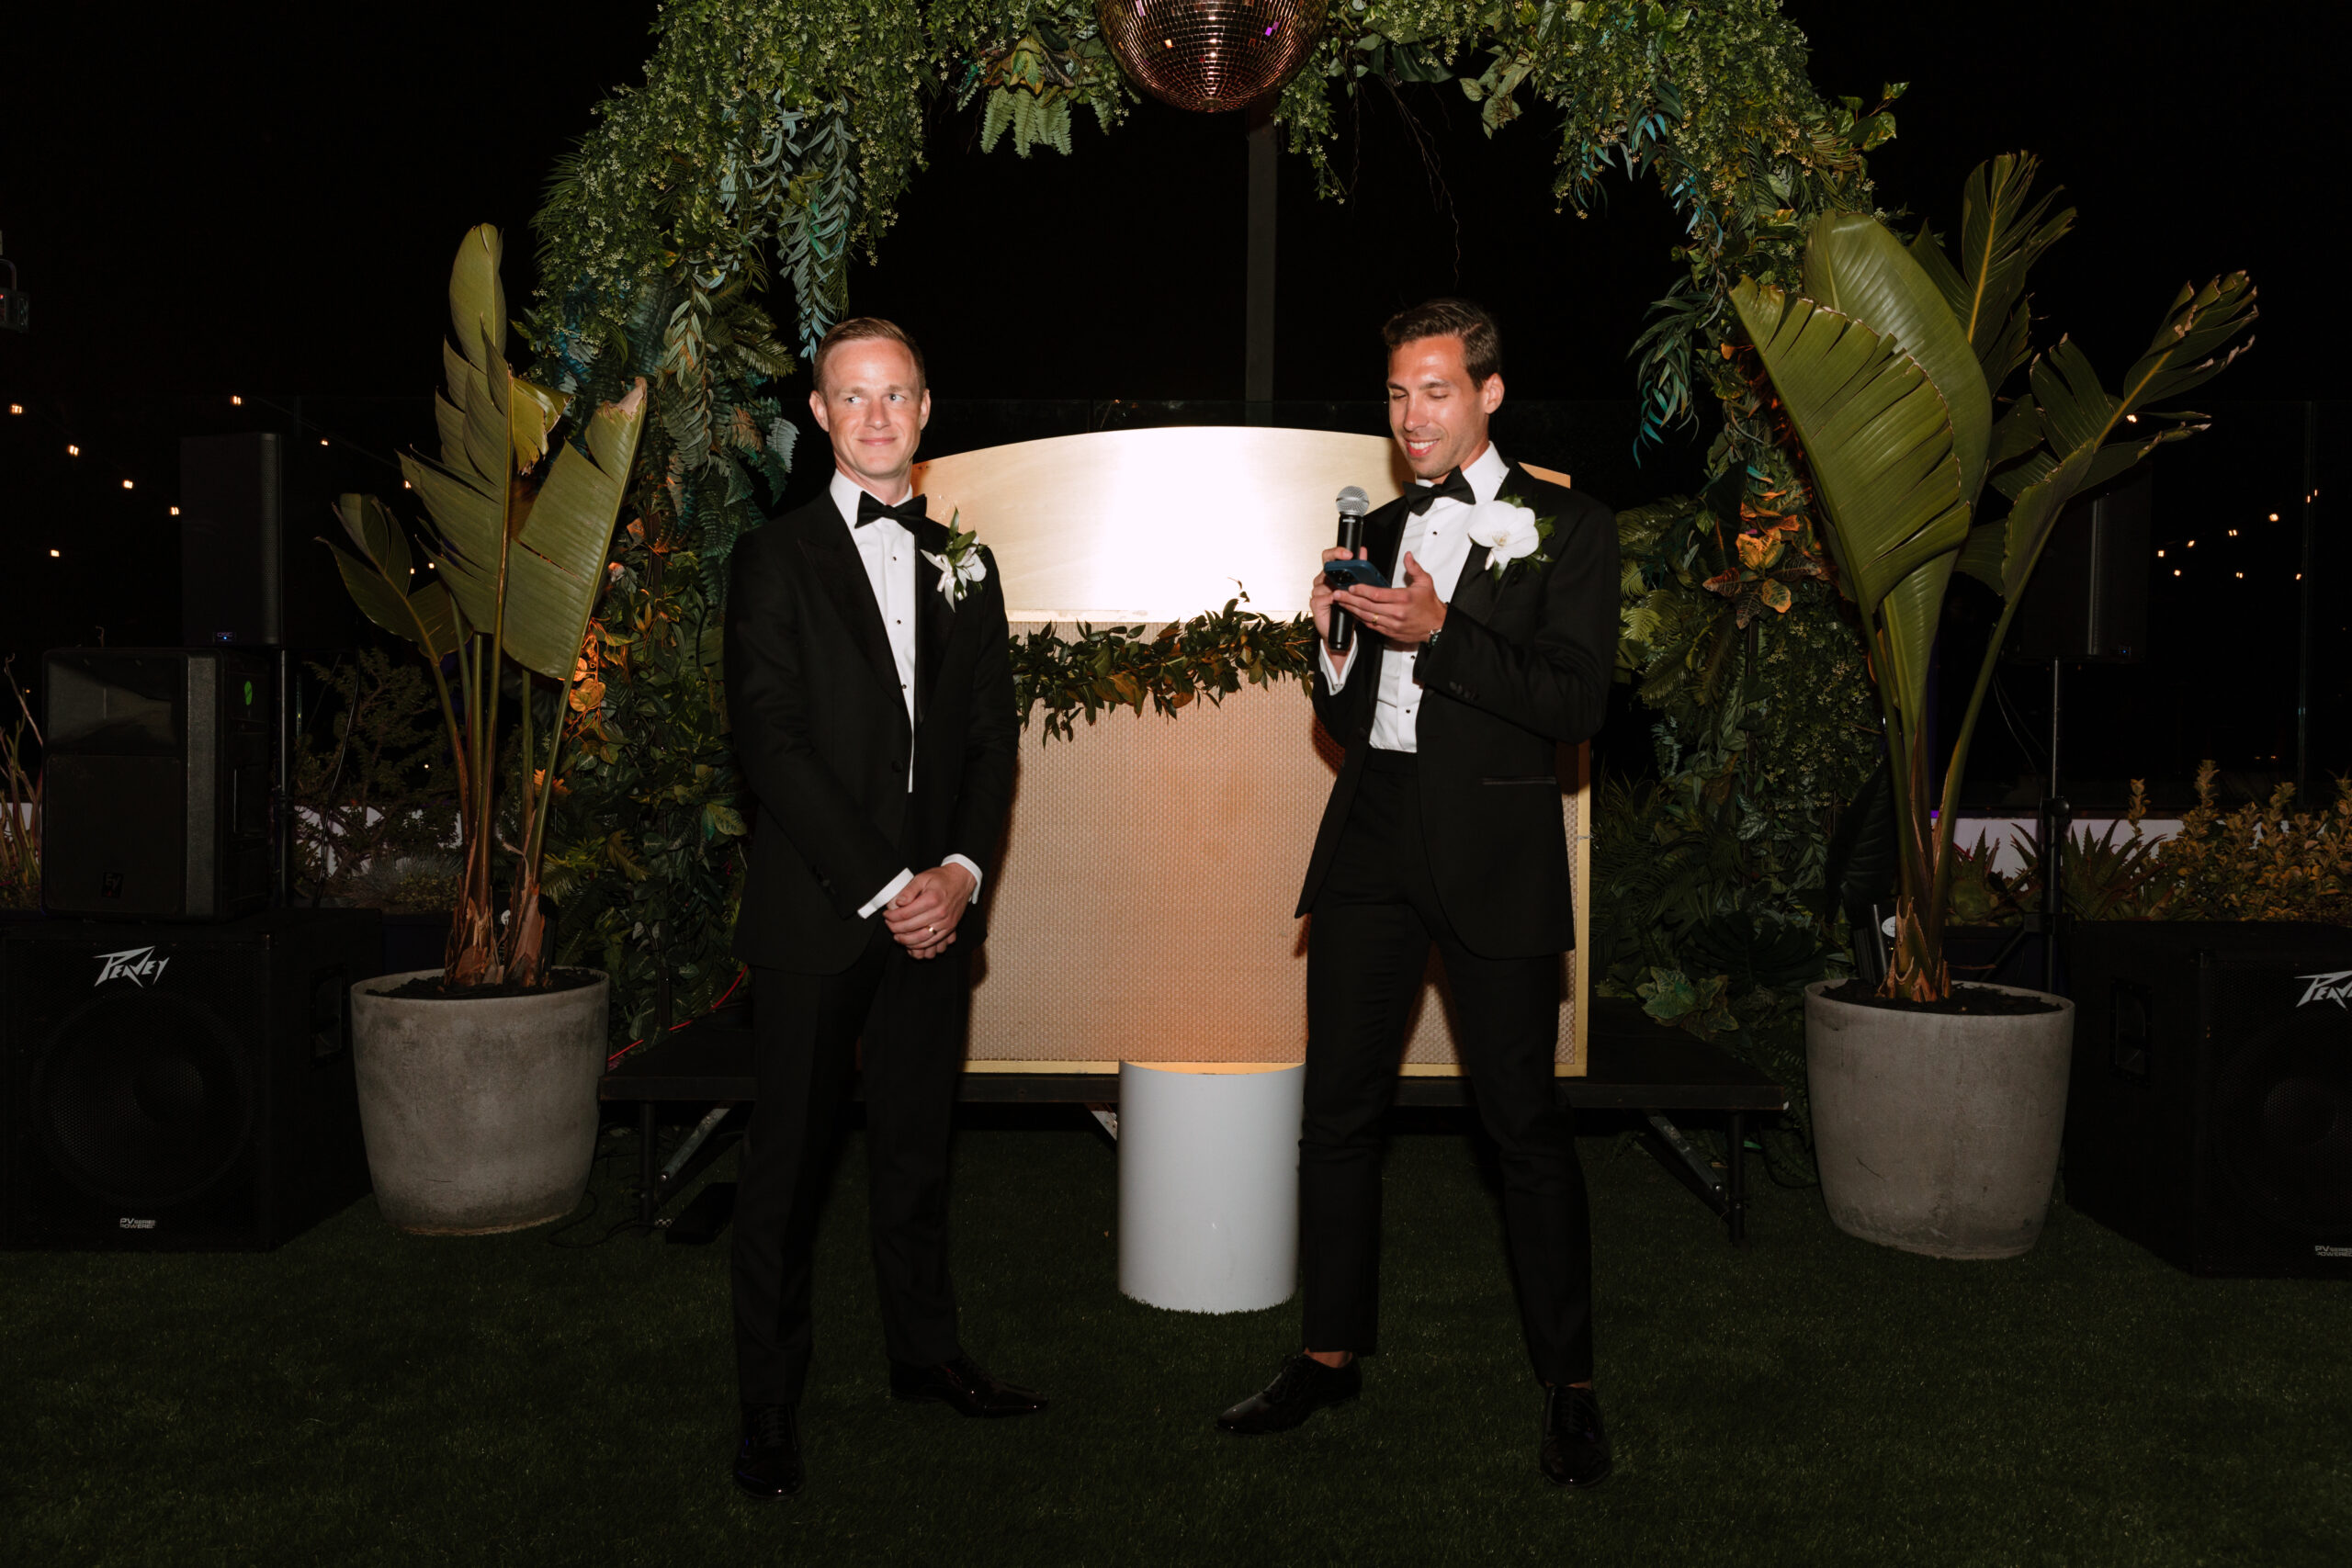 direct flash photo on Kimpton La Peer rooftop of gay grooms exchanging their wedding vows